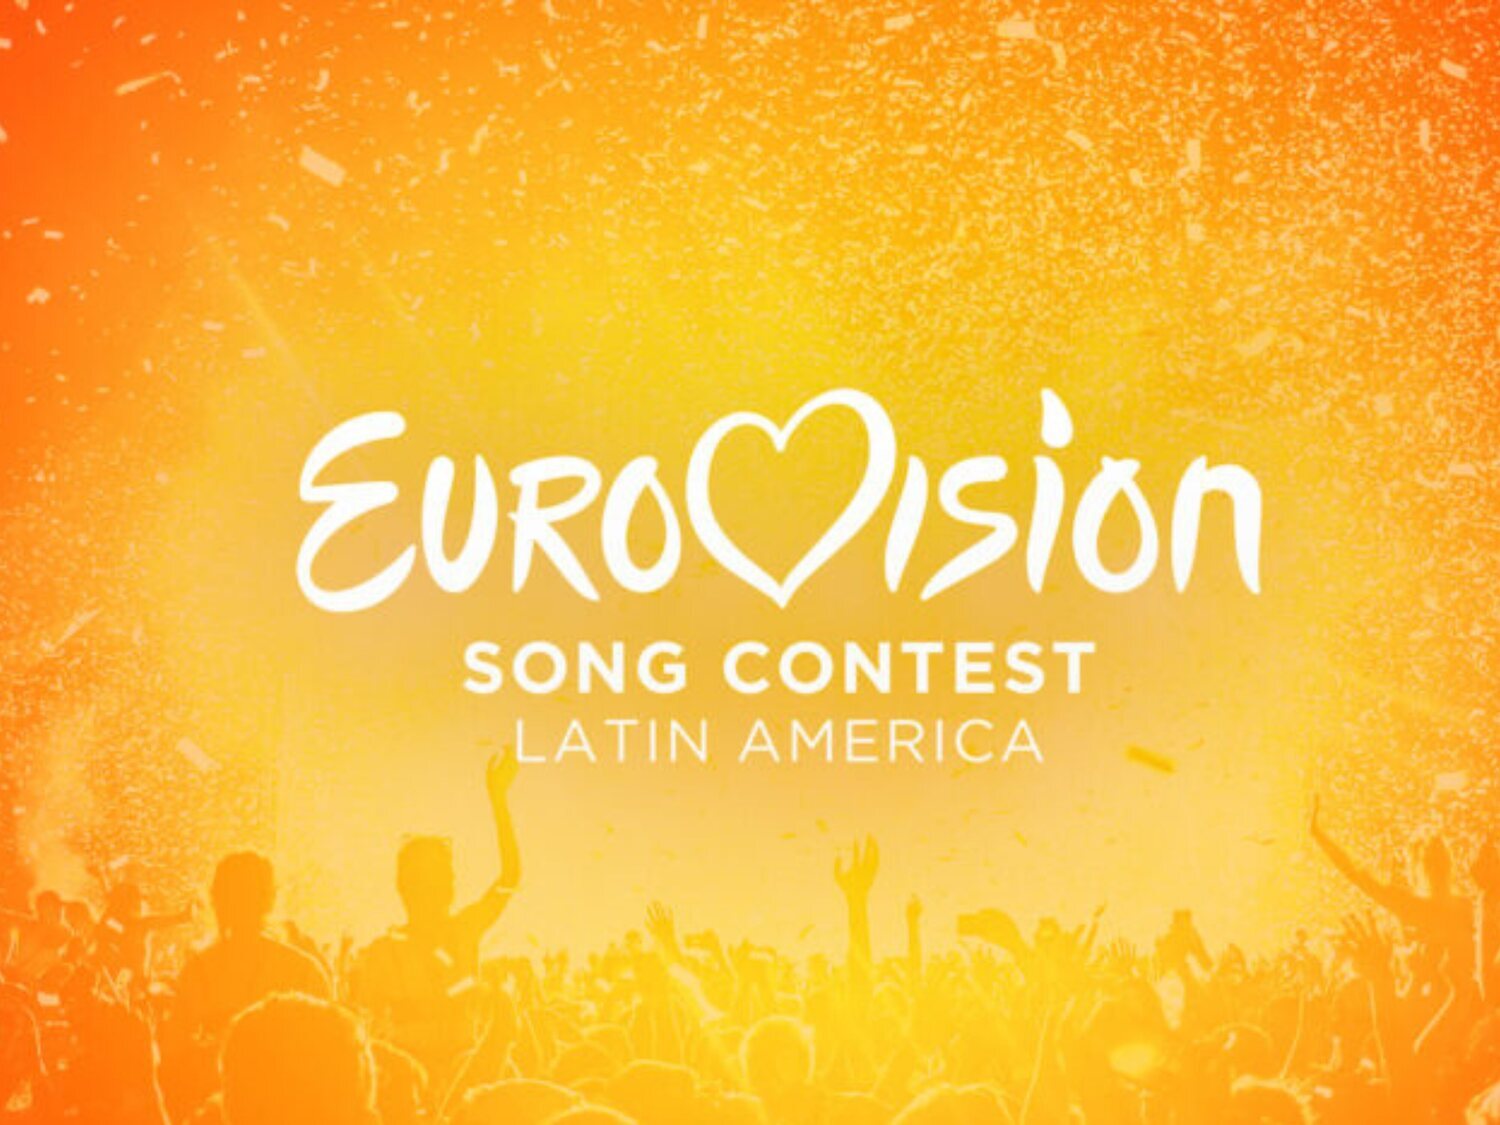 Eurovisión continúa su expansión global y llegará a Latinoamérica